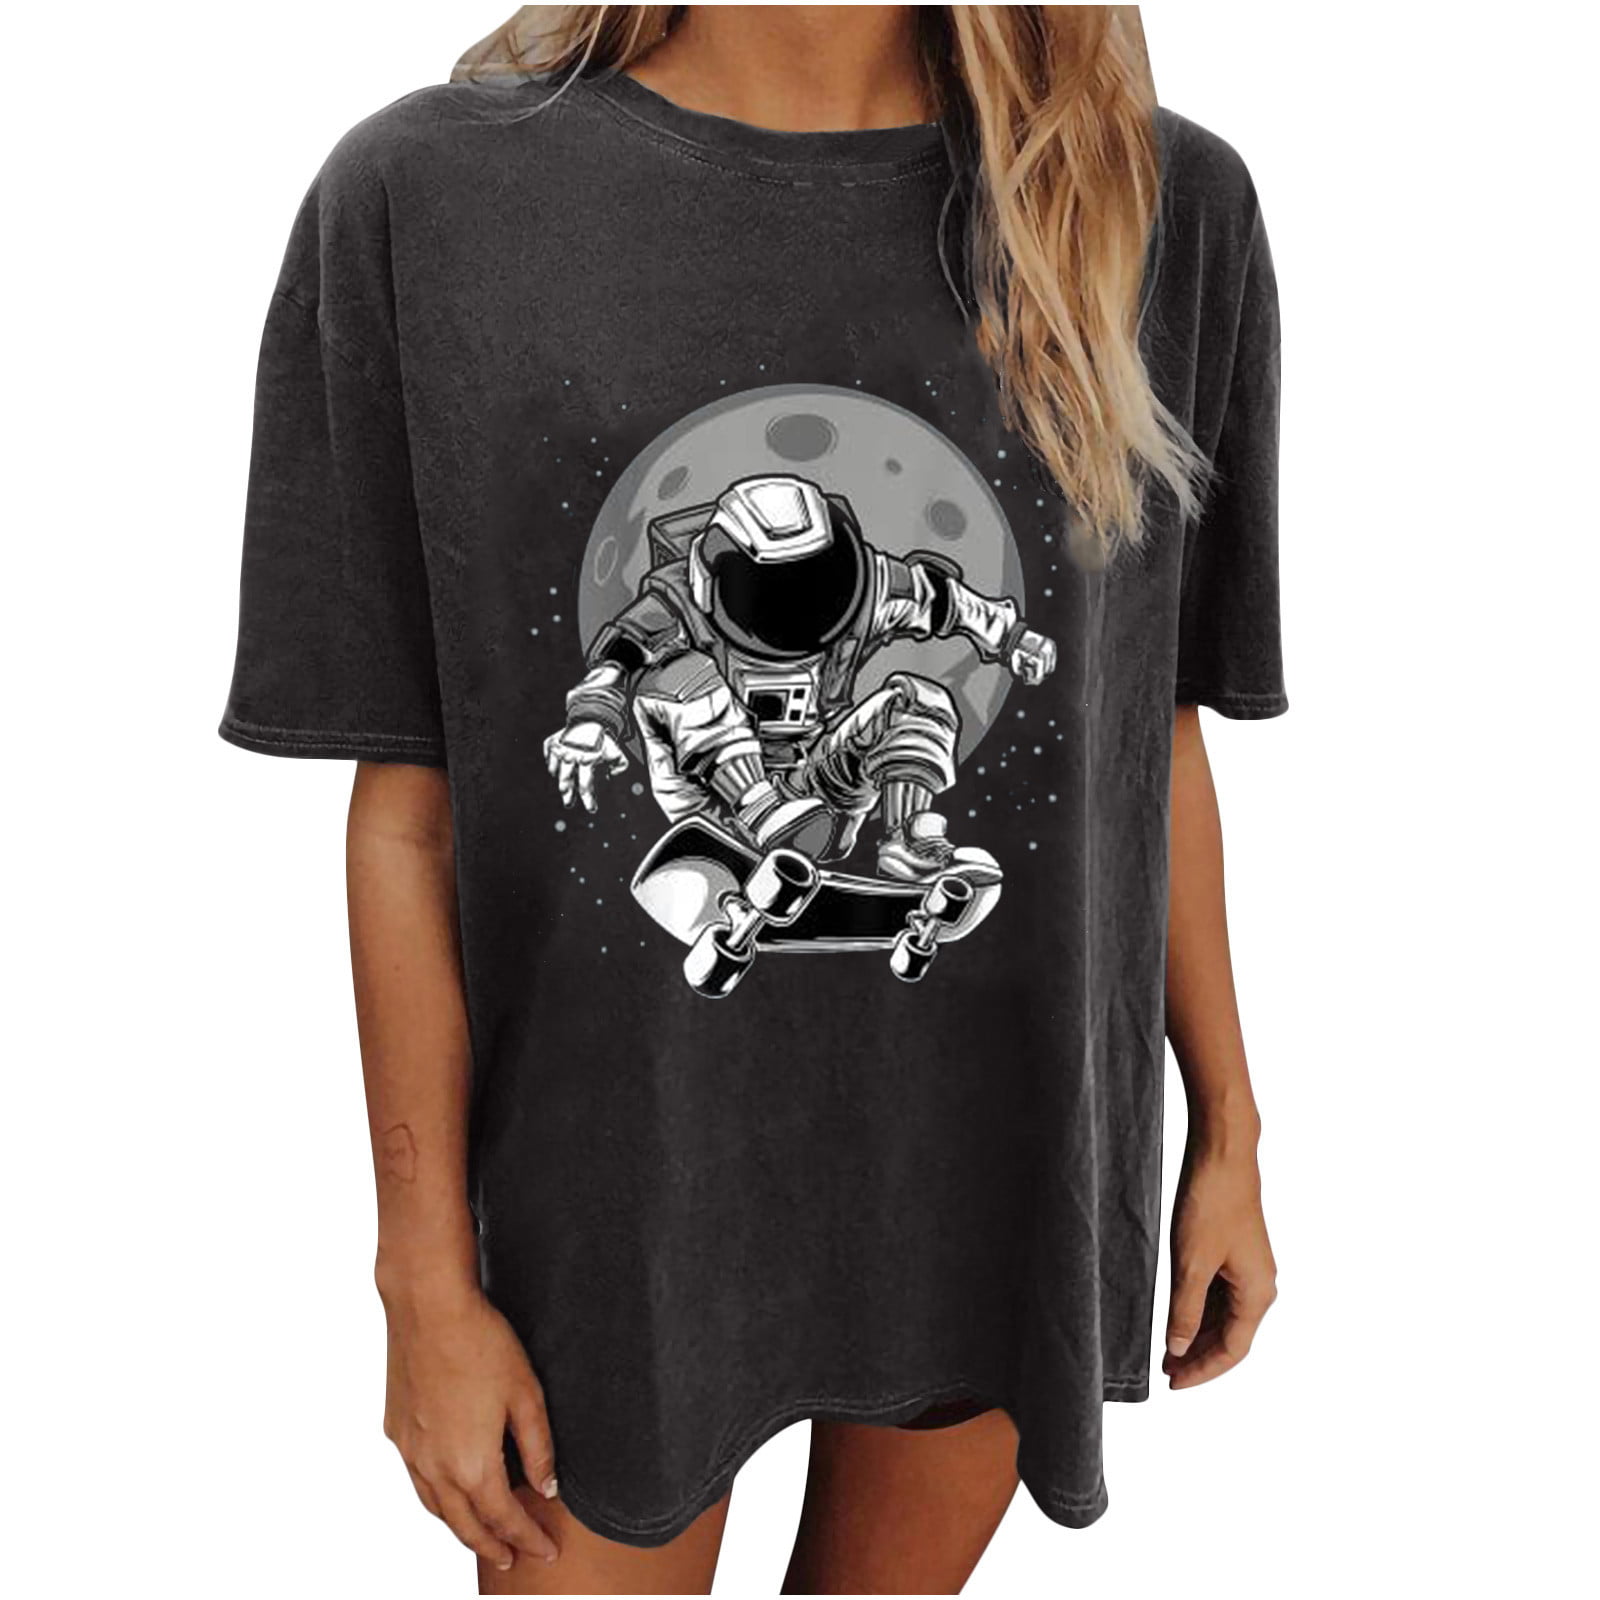 TINshirt Spaceman Womens Tshirt Graphic Summer Short-Sleeve Round Neck Fashion Tees